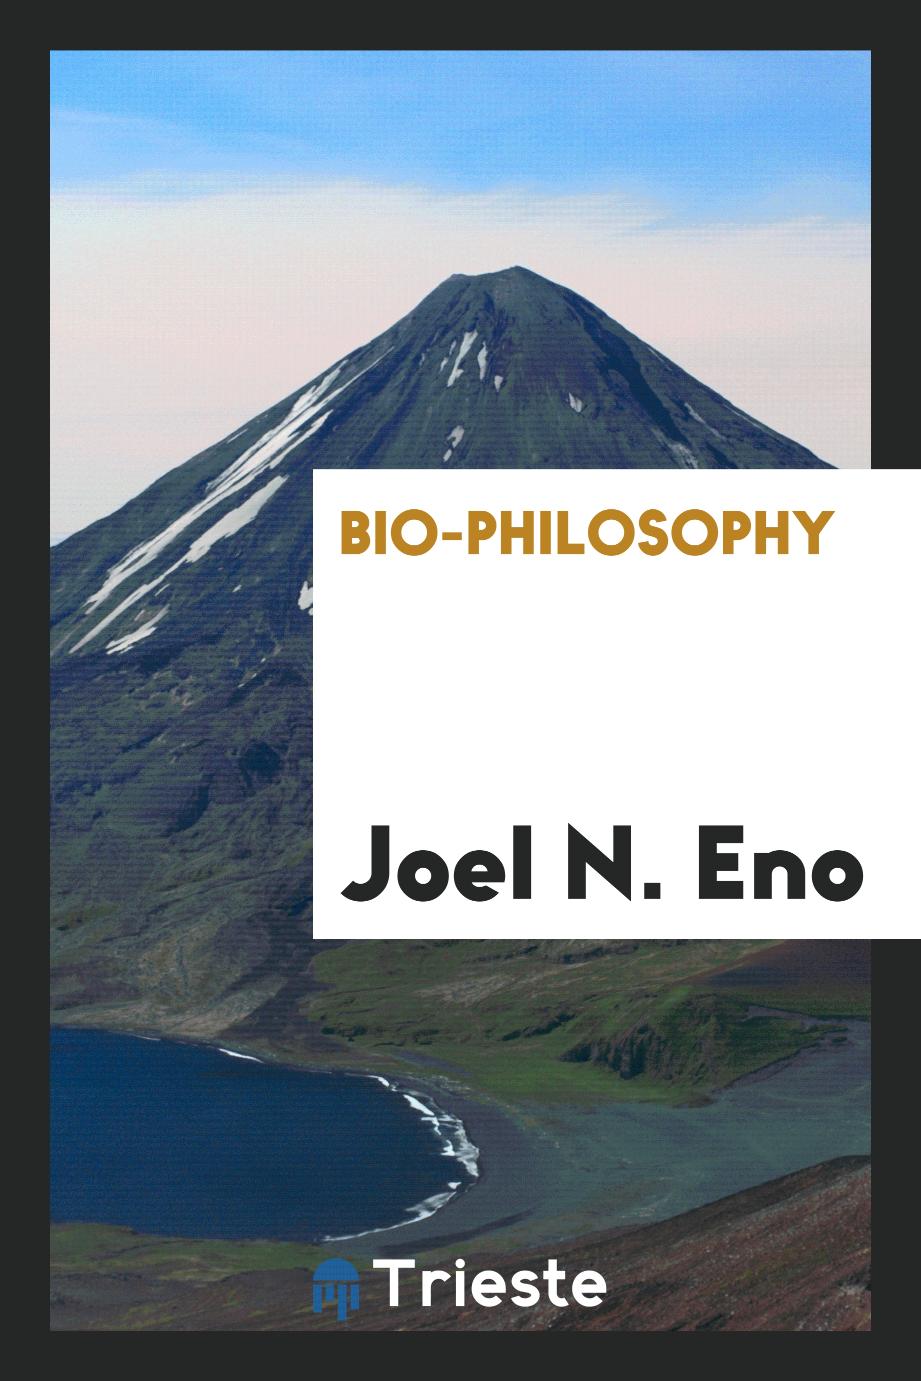 Bio-philosophy